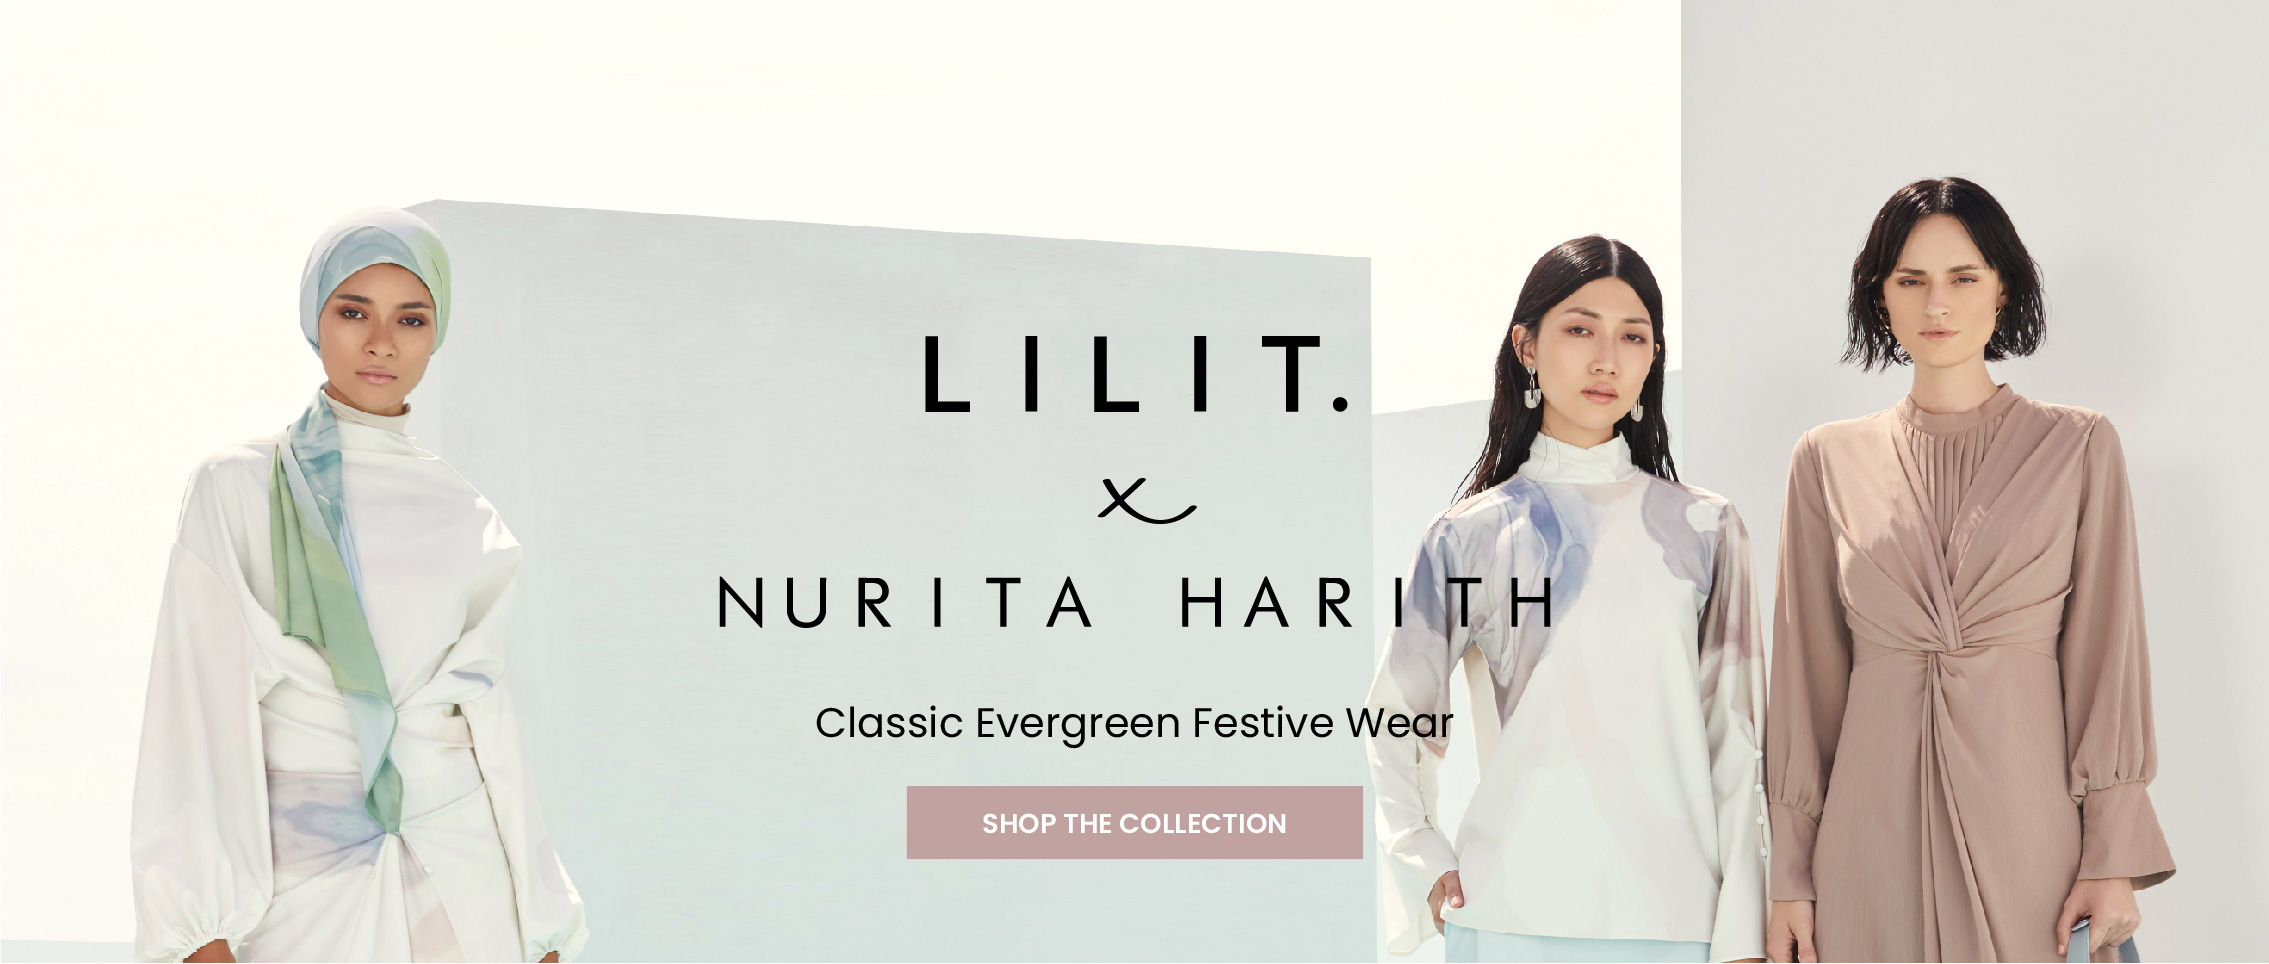 LILIT. x Nurita Harith